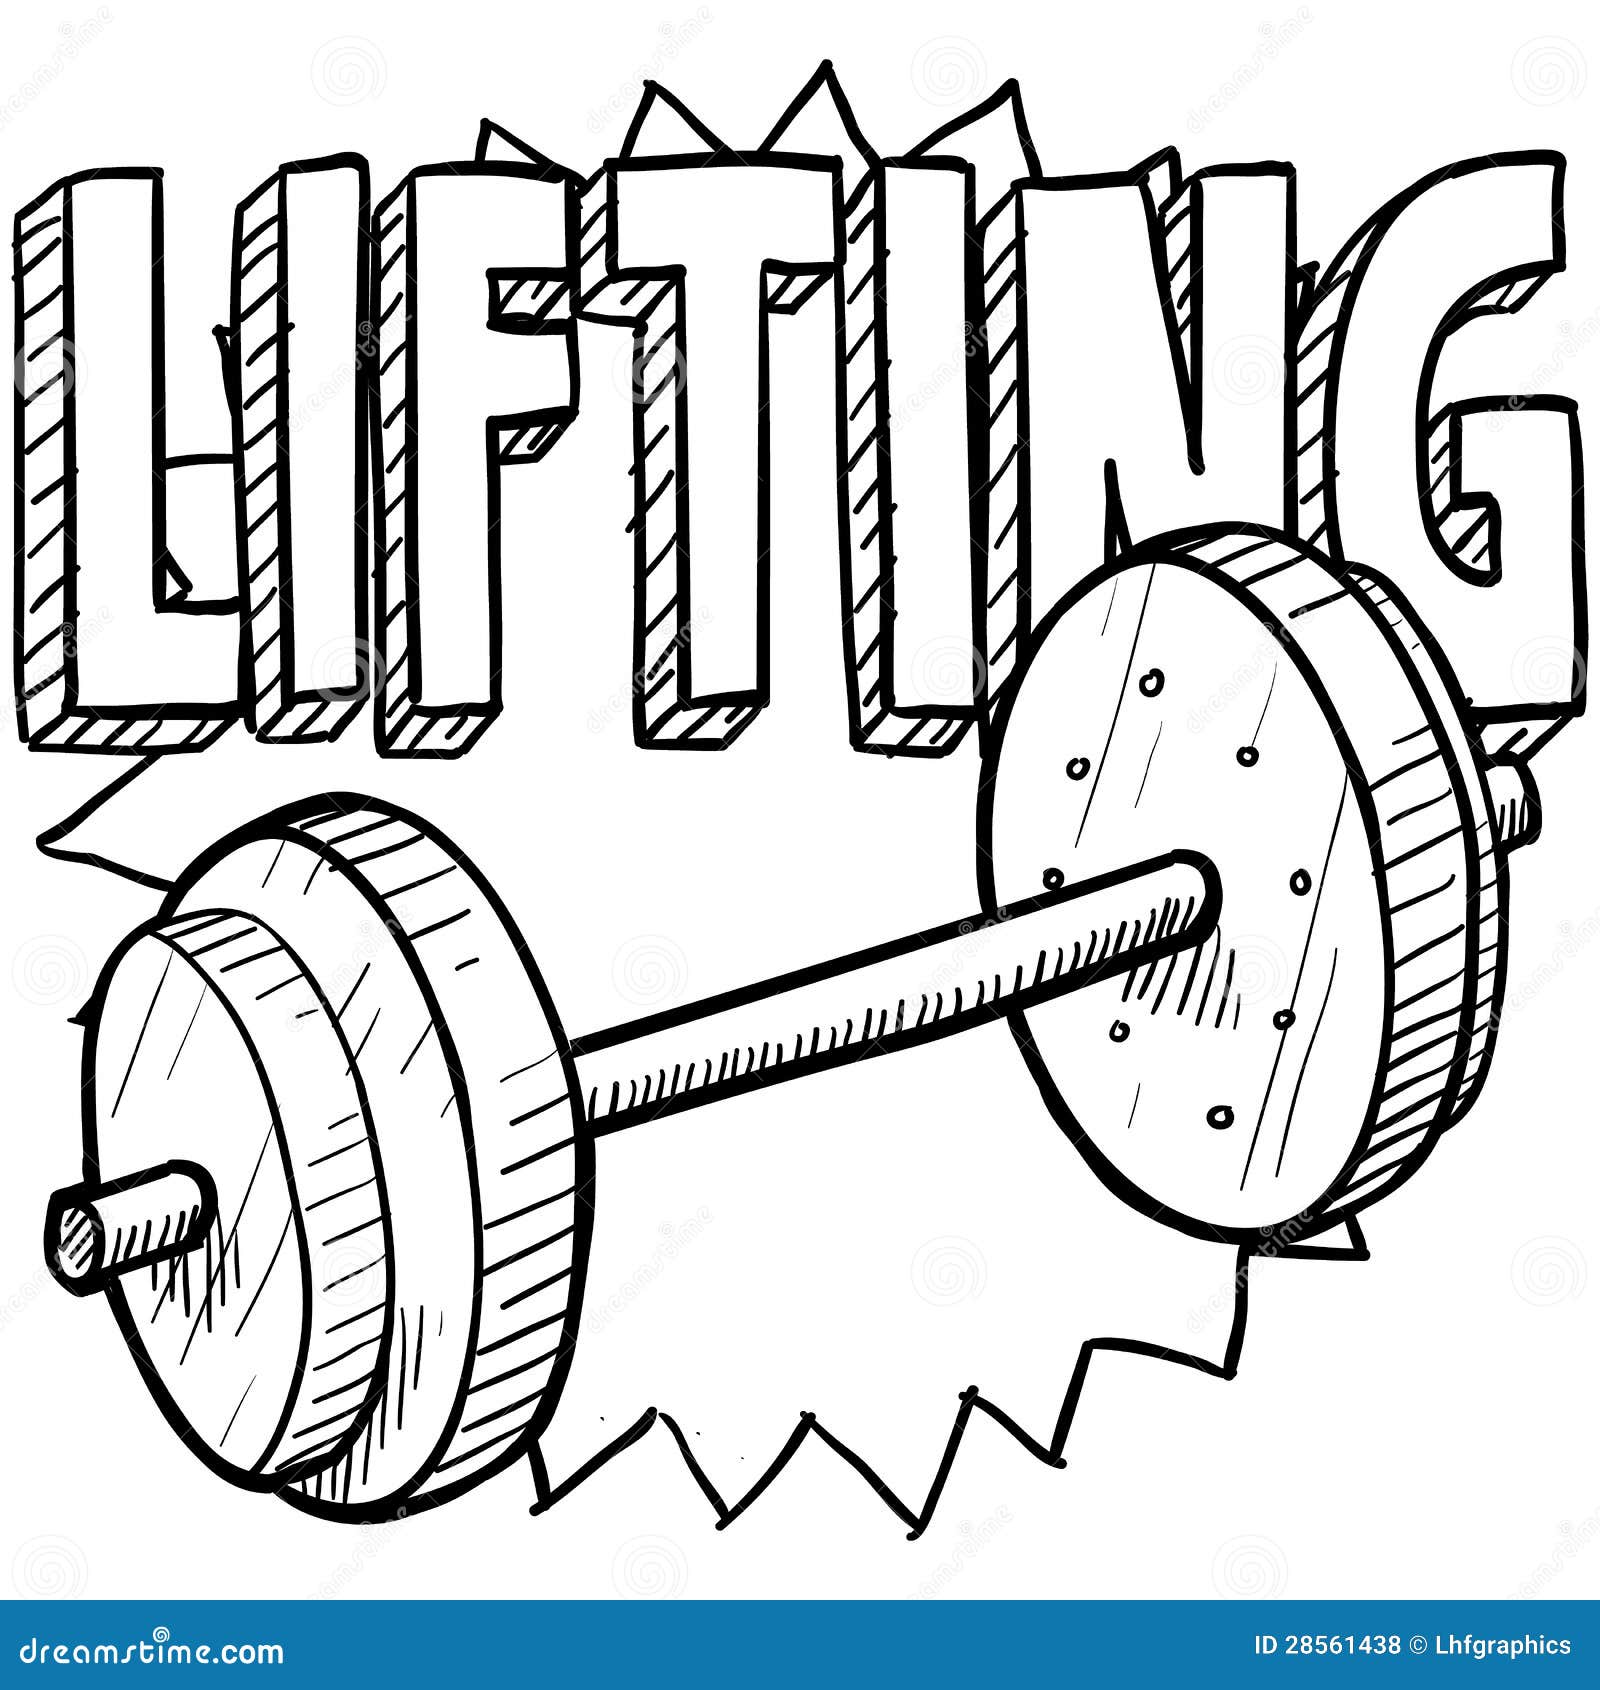 Weightlifting sketch stock vector. Illustration of studio - 28561438